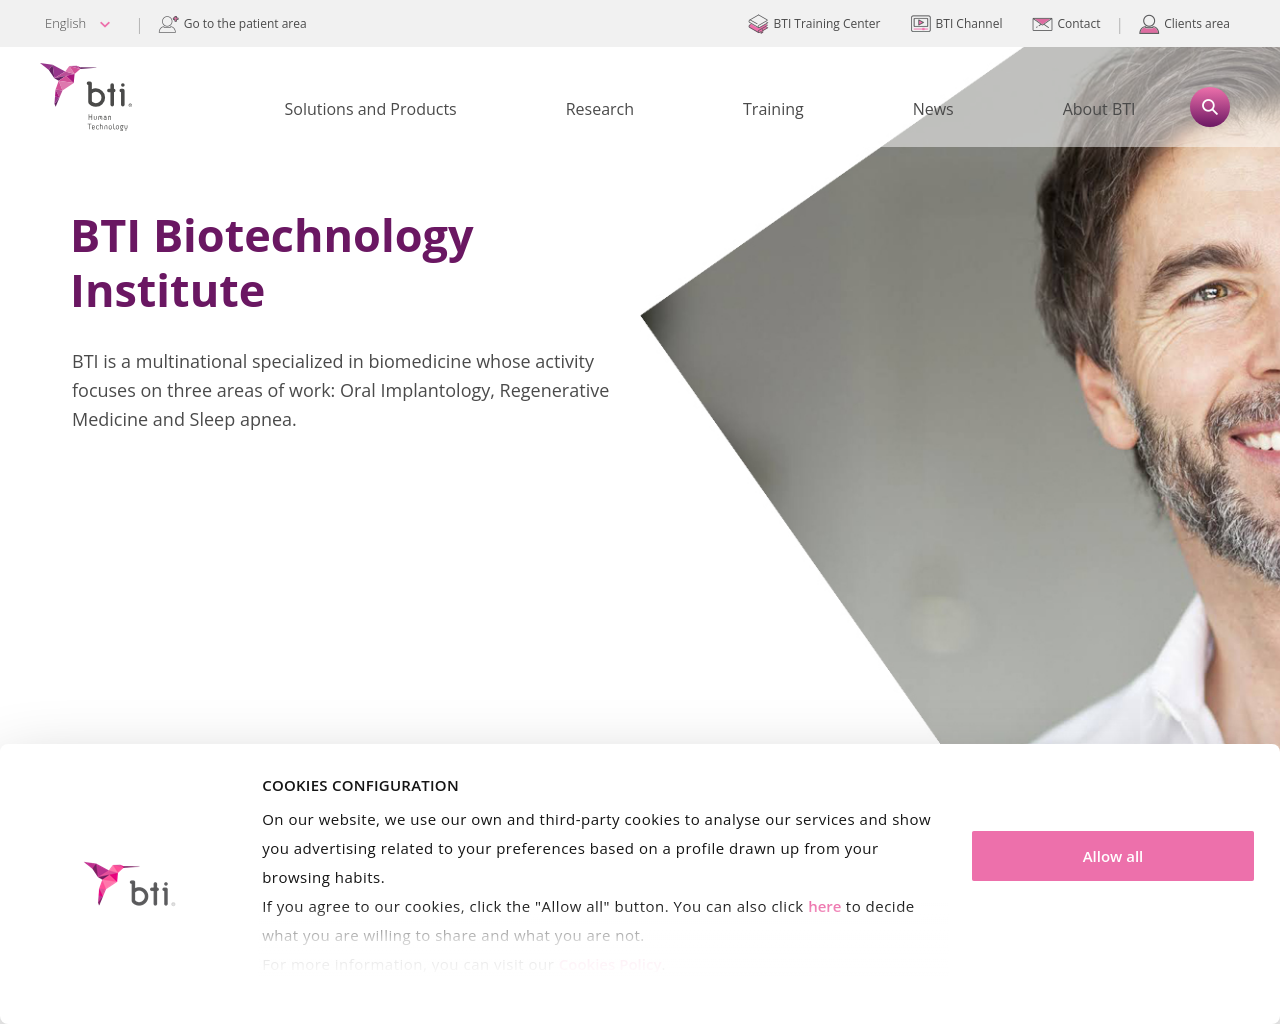 bti-biotechnologyinstitute.com